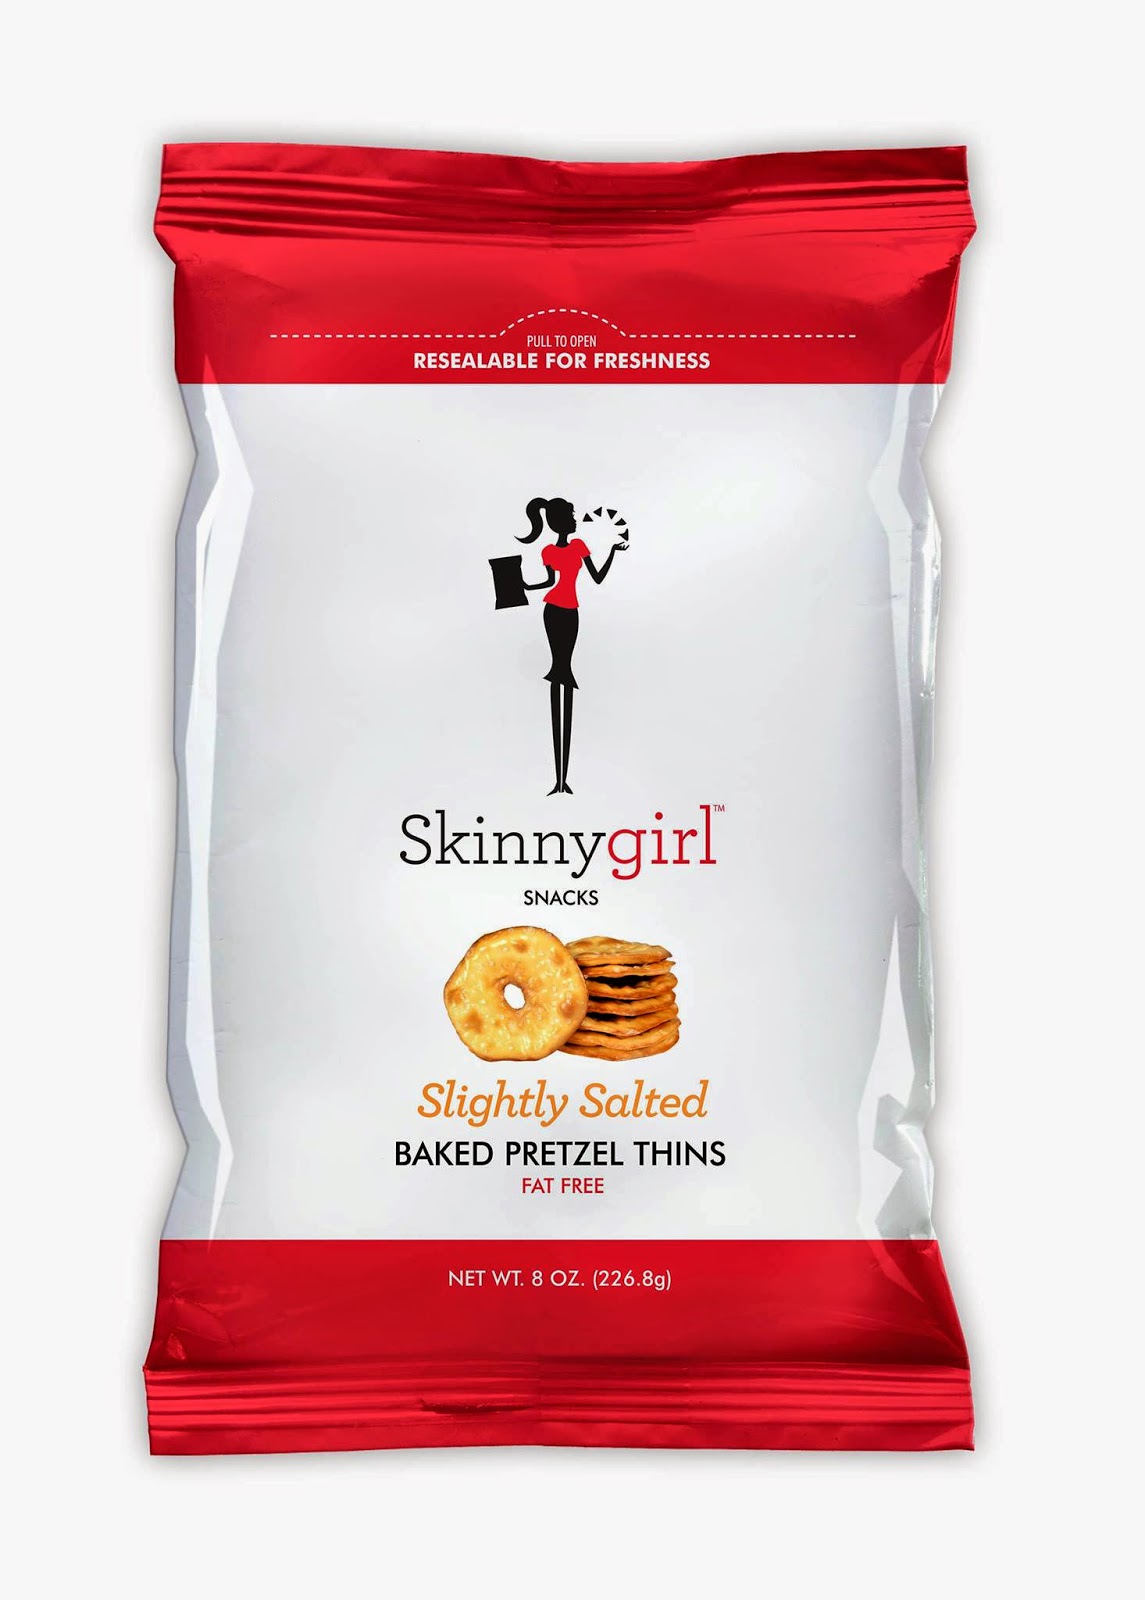 Oh Hell Yes Introducing Skinnygirl Snacks